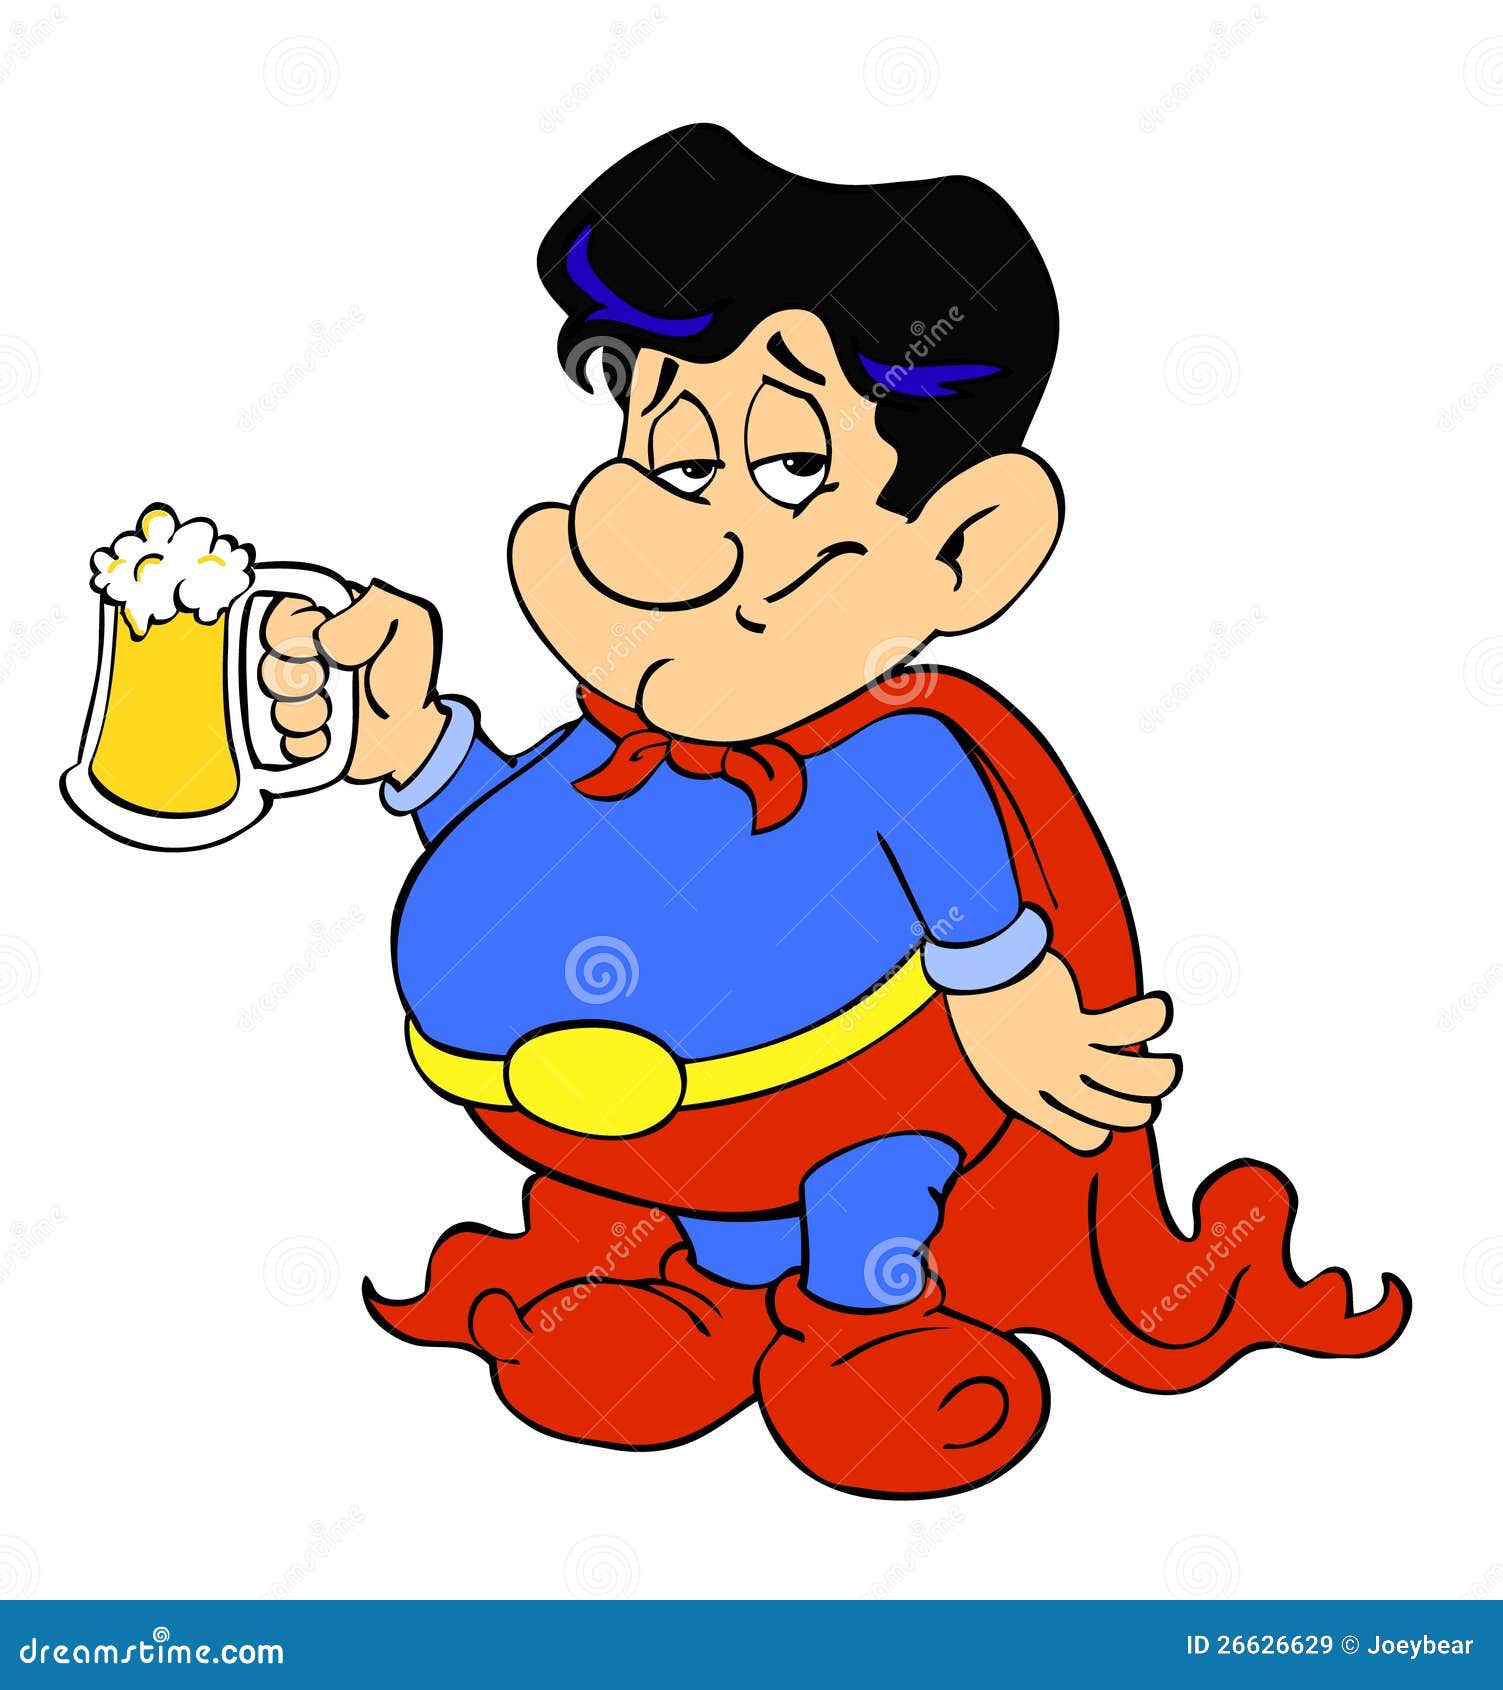 Giraffe Superhero Drinks Beer Mascot Character Stock Vector (Royalty Free)  1569106174